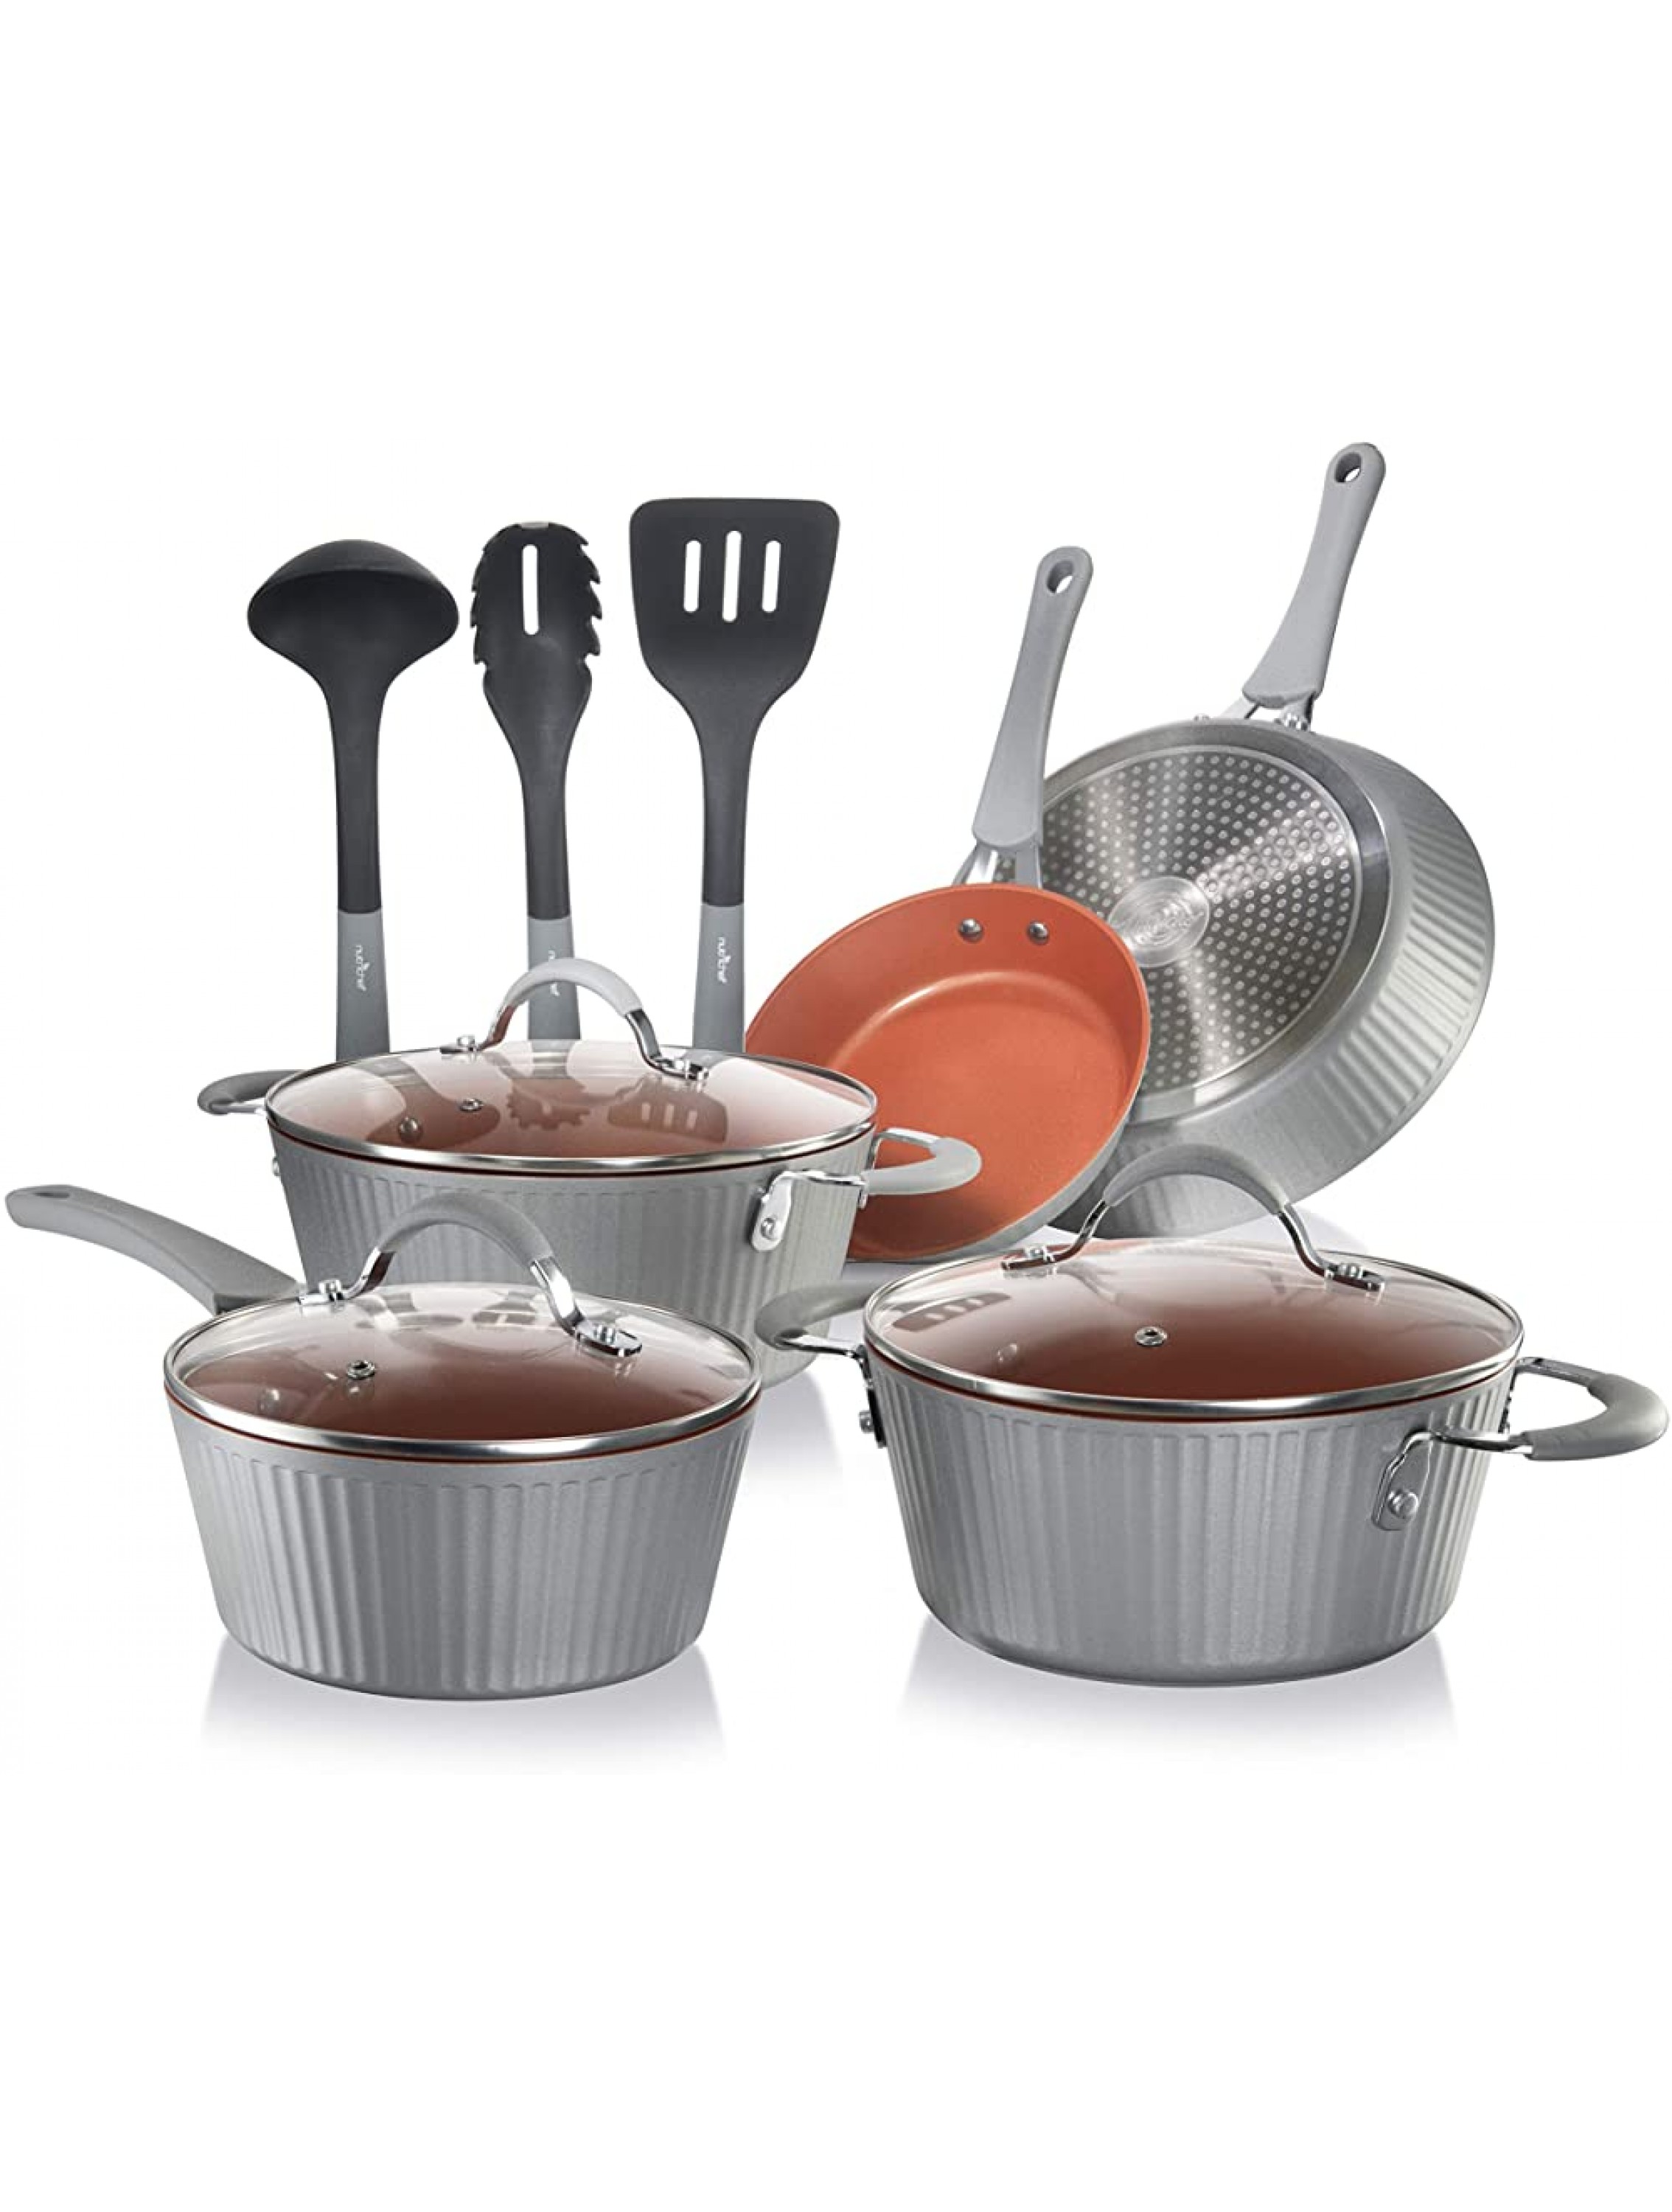 NutriChef Nonstick Cookware Excilon |Home Kitchen Ware Pots & Pan Set with Saucepan Frying Pans Cooking Pots Lids Utensil PTFE PFOA PFOS Free 11 Pcs Gray - BWXKJ70OJ